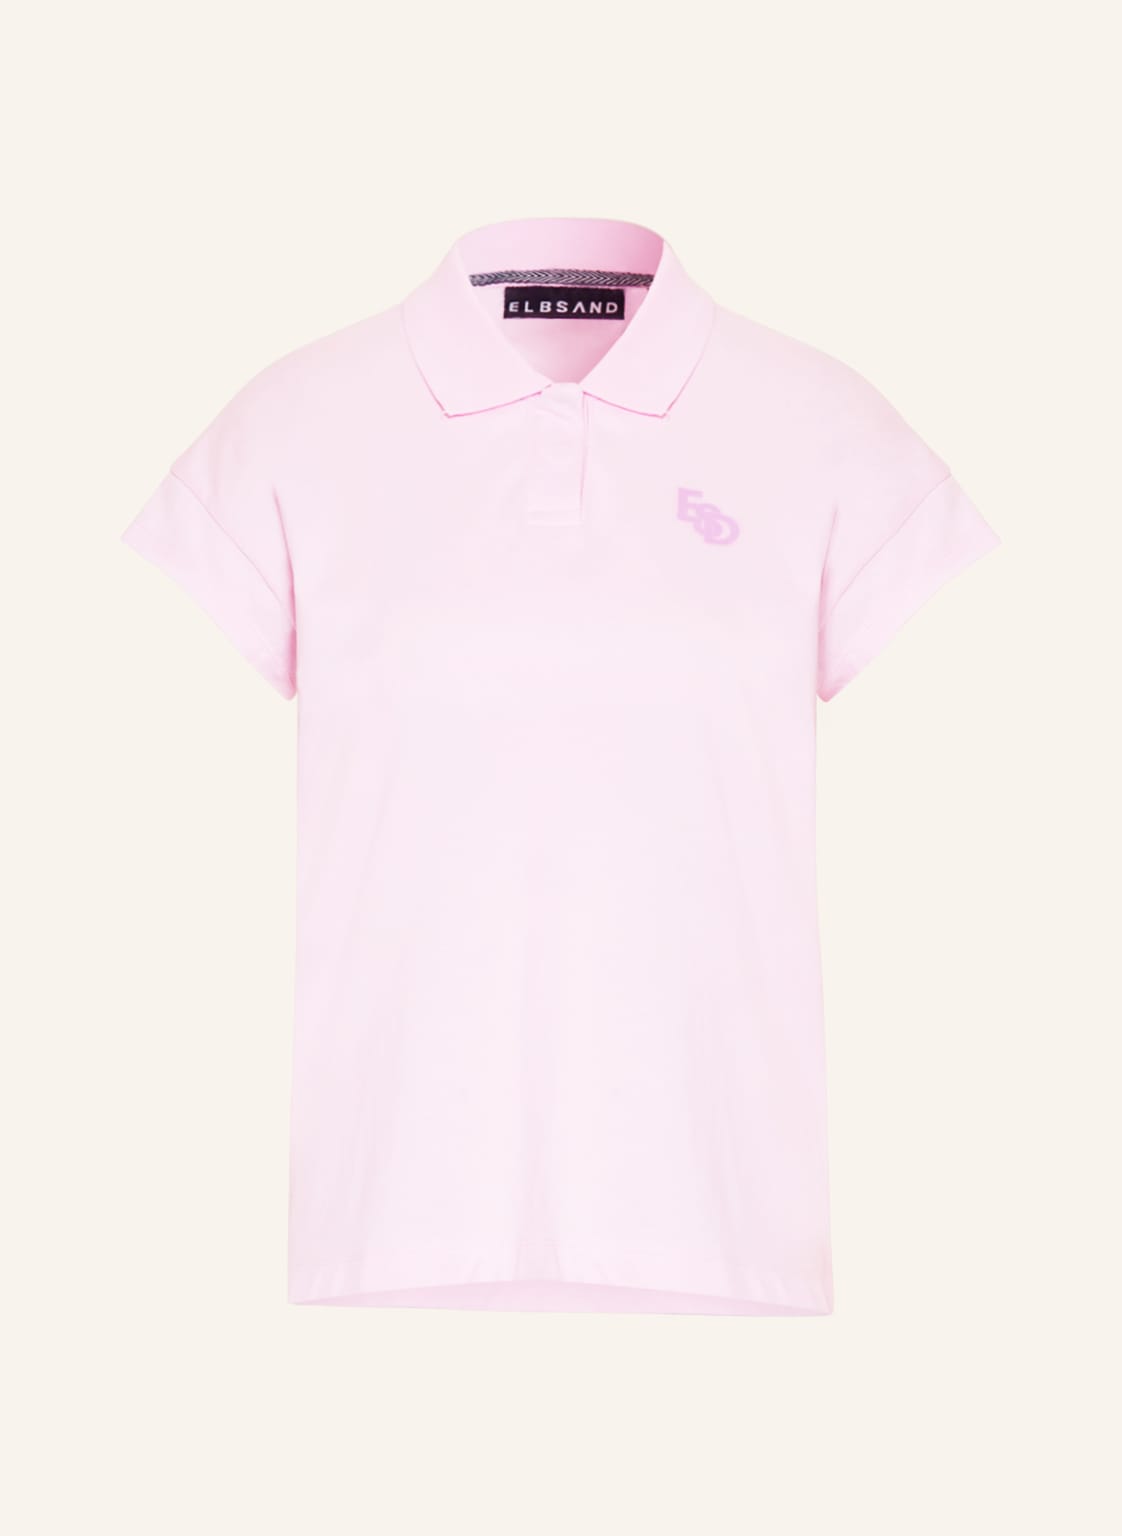 Elbsand Piqué-Poloshirt Torvi rosa von ELBSAND